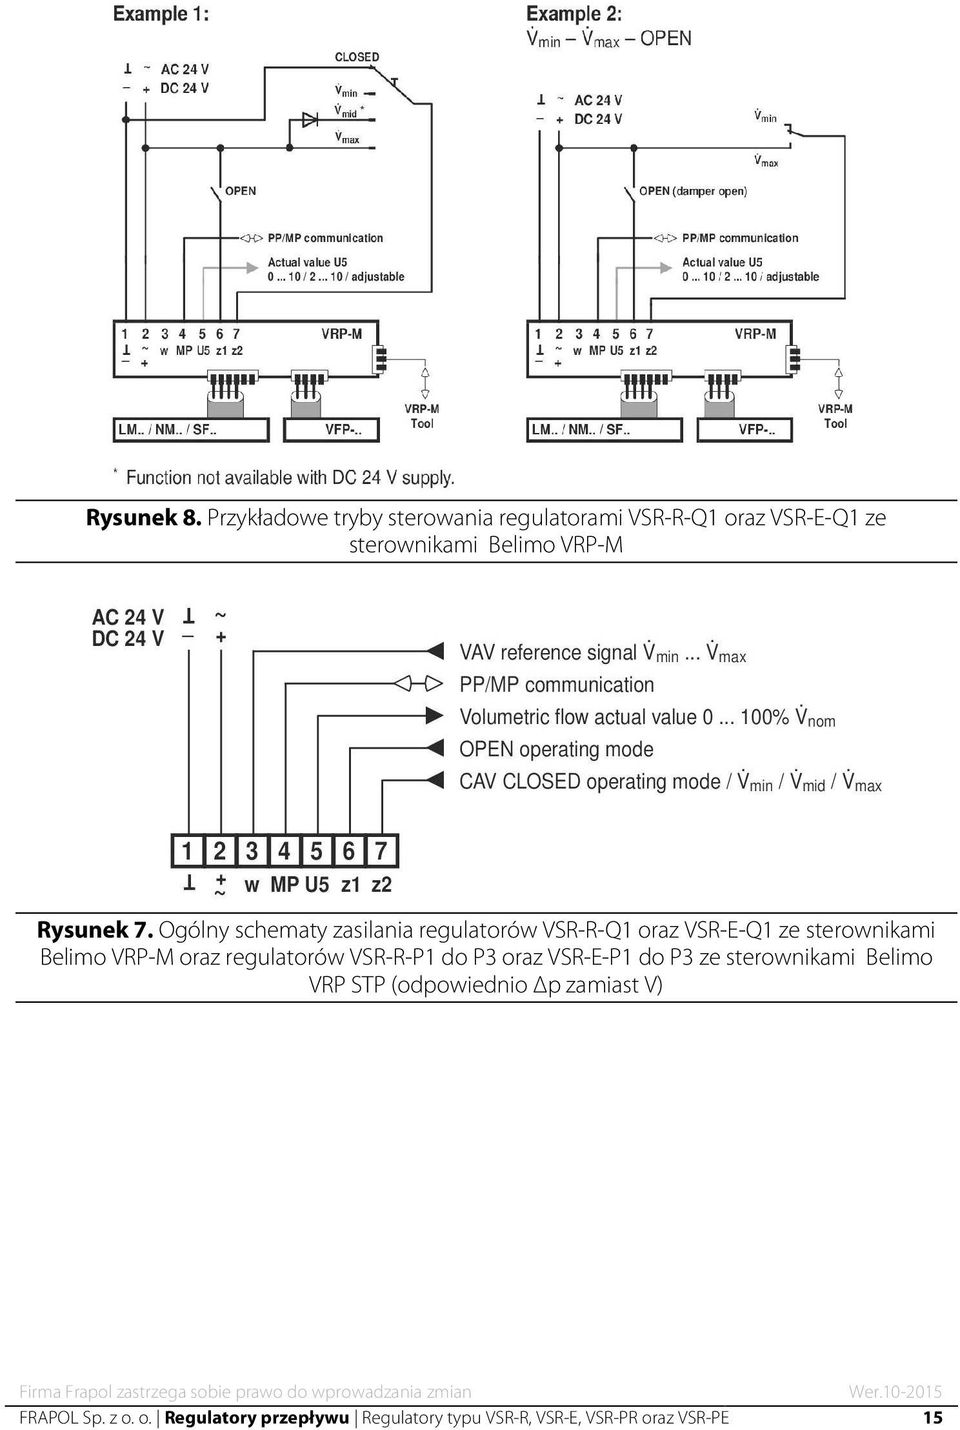 7. Ogólny schematy zasilania regulatorów VSR-R-Q1 oraz VSR-E-Q1 ze sterownikami Belimo VRP-M oraz